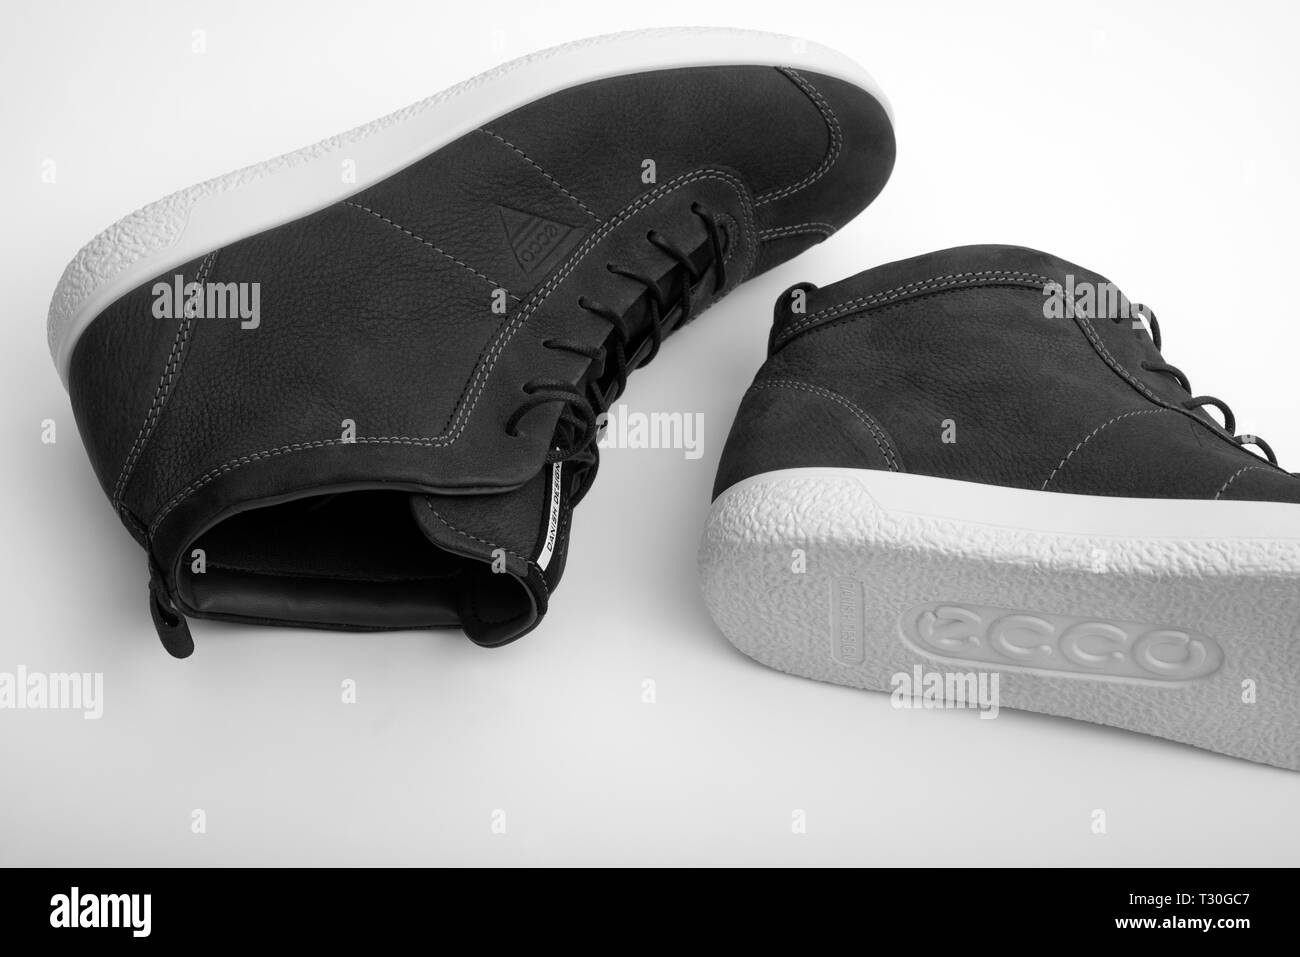 Ecco shoes Stock Photo - Alamy